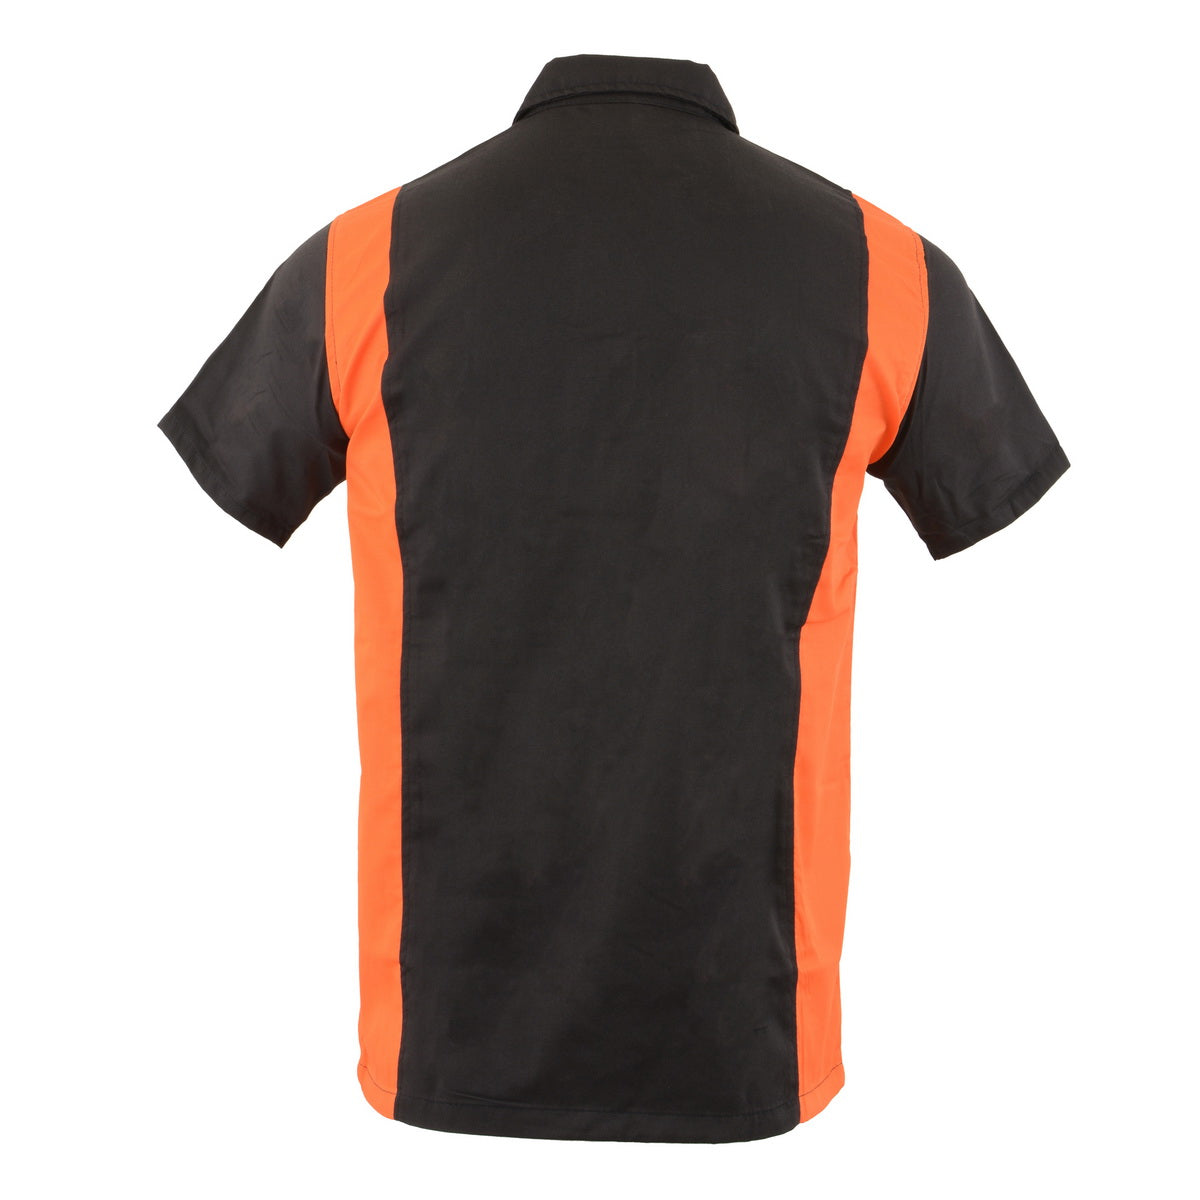 Biker Clothing Co. MDM11675.94 Men's Black and Orange Button Up Heavy-Duty Work Shirt | Classic Mechanic Work Shirt